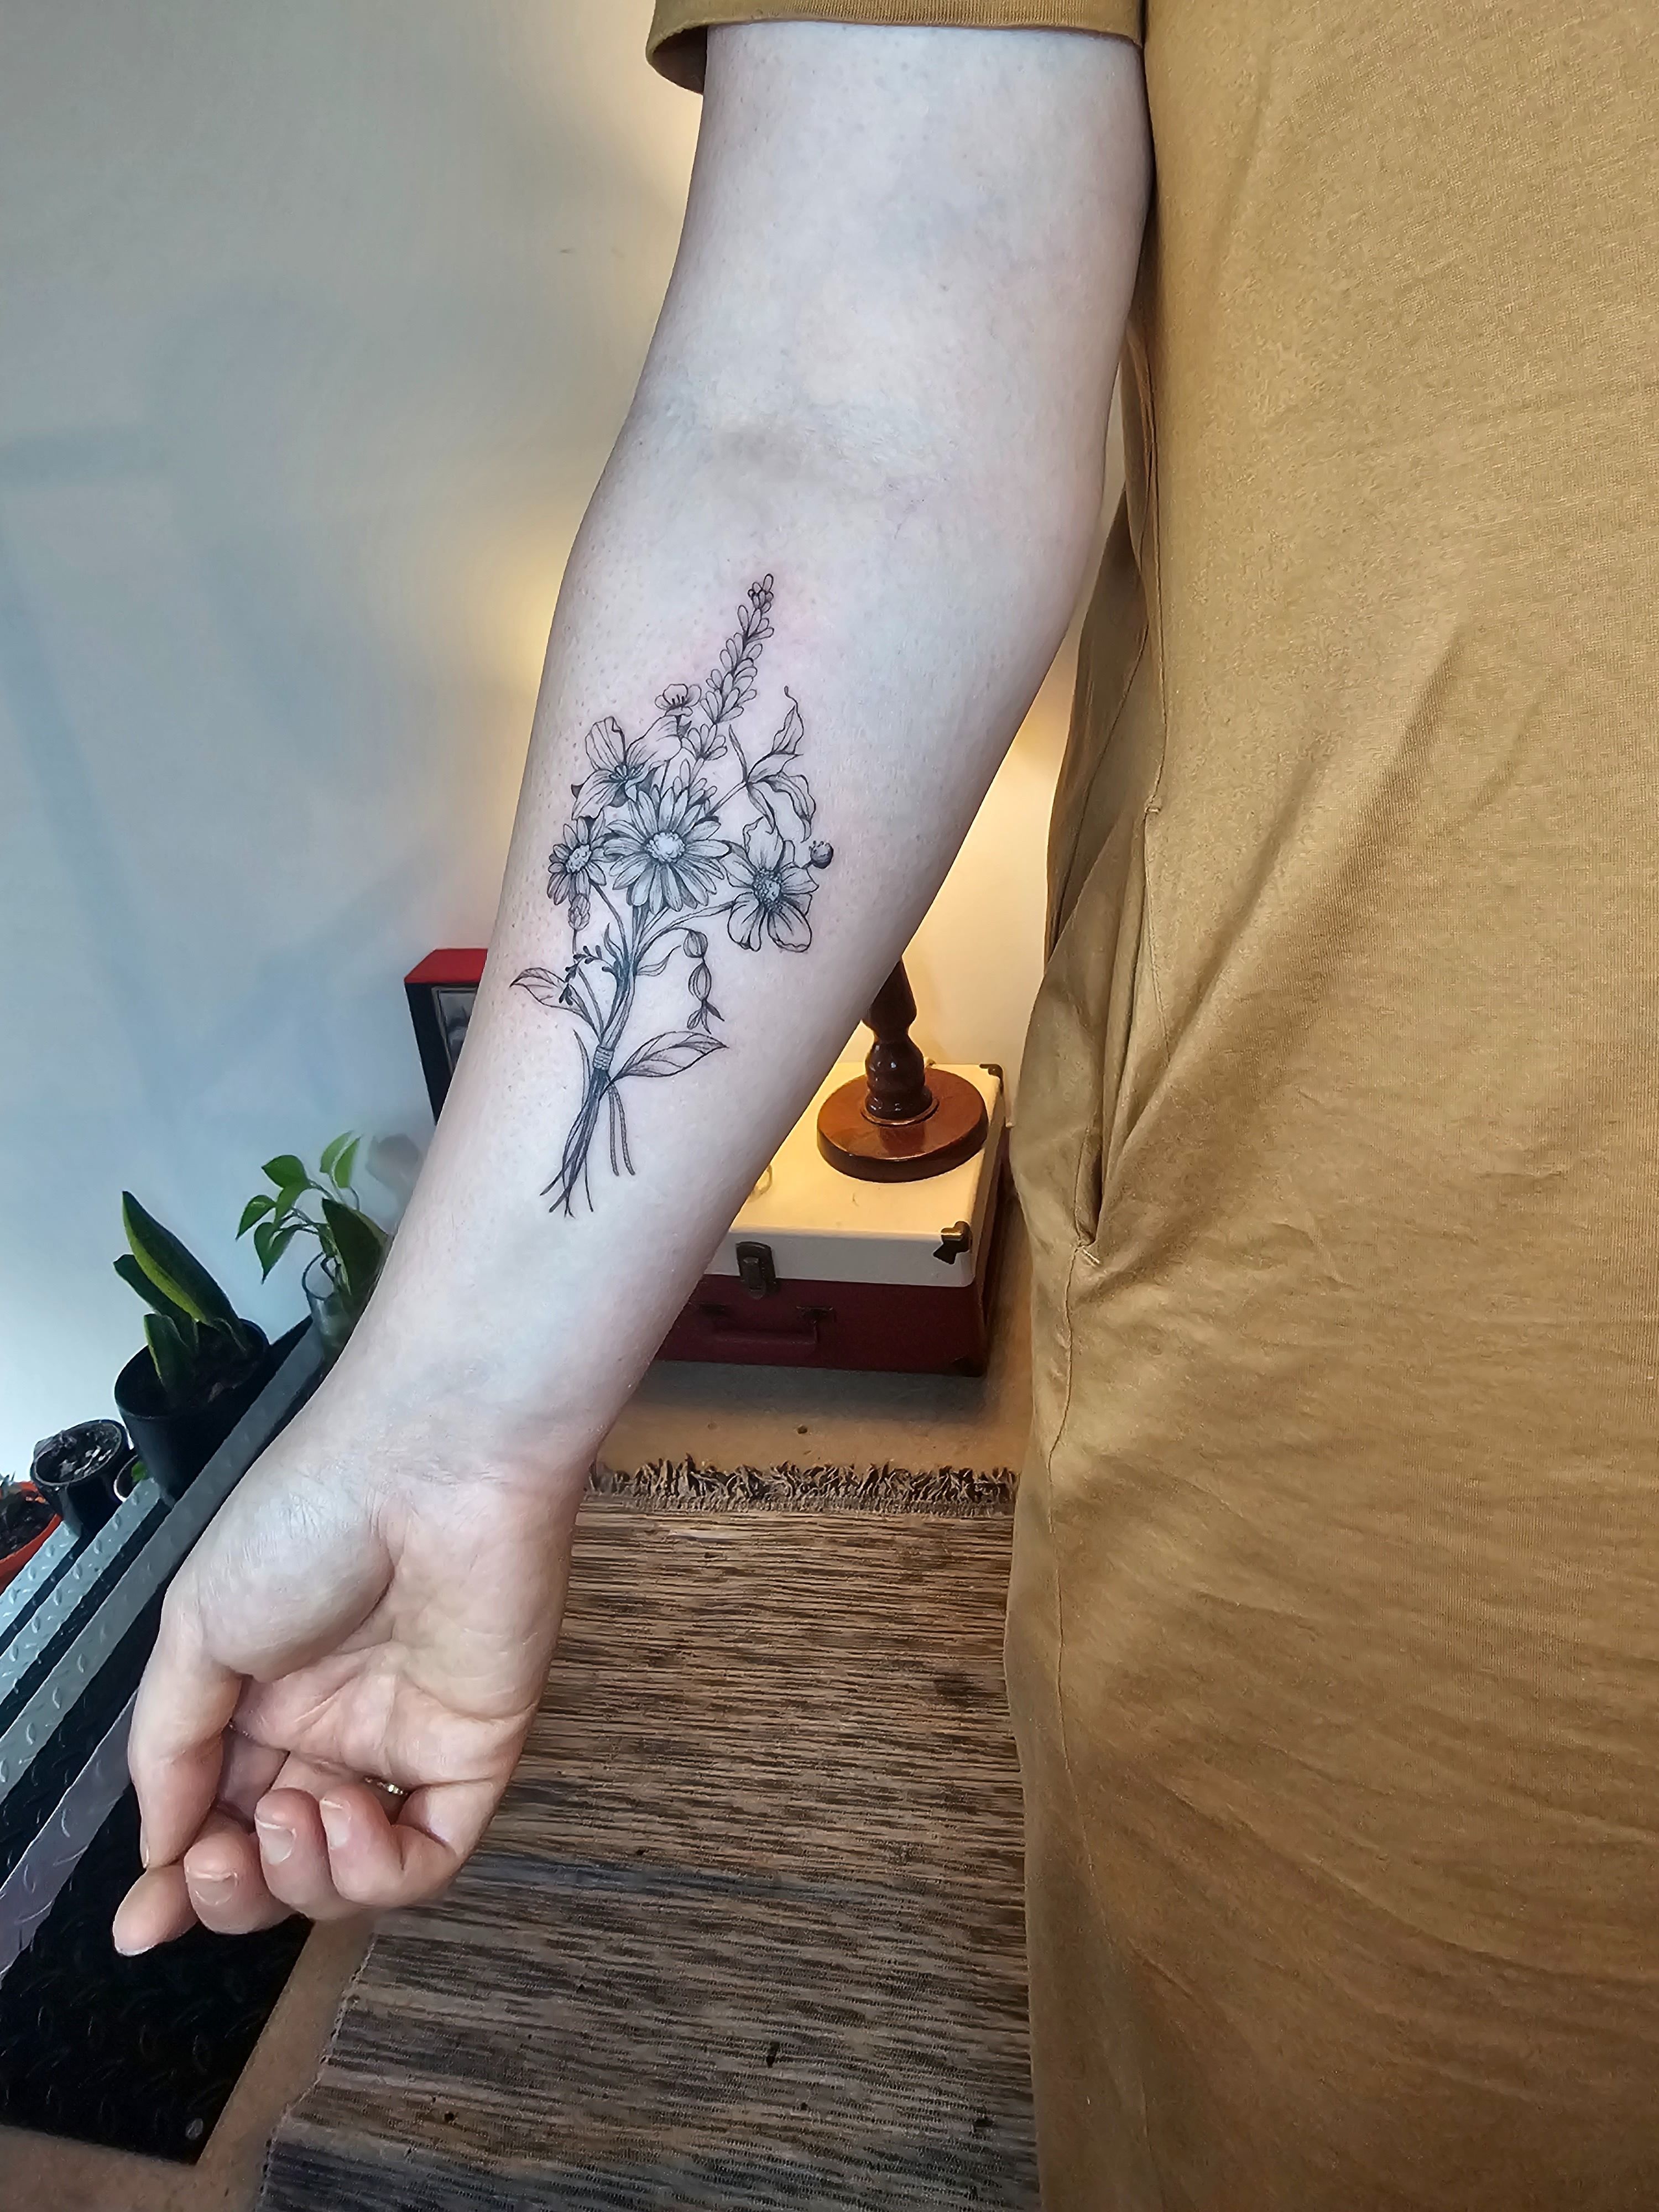 Women Tattoo - Geometric Diamond Rose Forearm Tattoo Ideas for Women -  Black Wild Flower Vine Leaf Arm Tat - www.MyBodiArt.com - TattooViral.com |  Your Number One source for daily Tattoo designs,